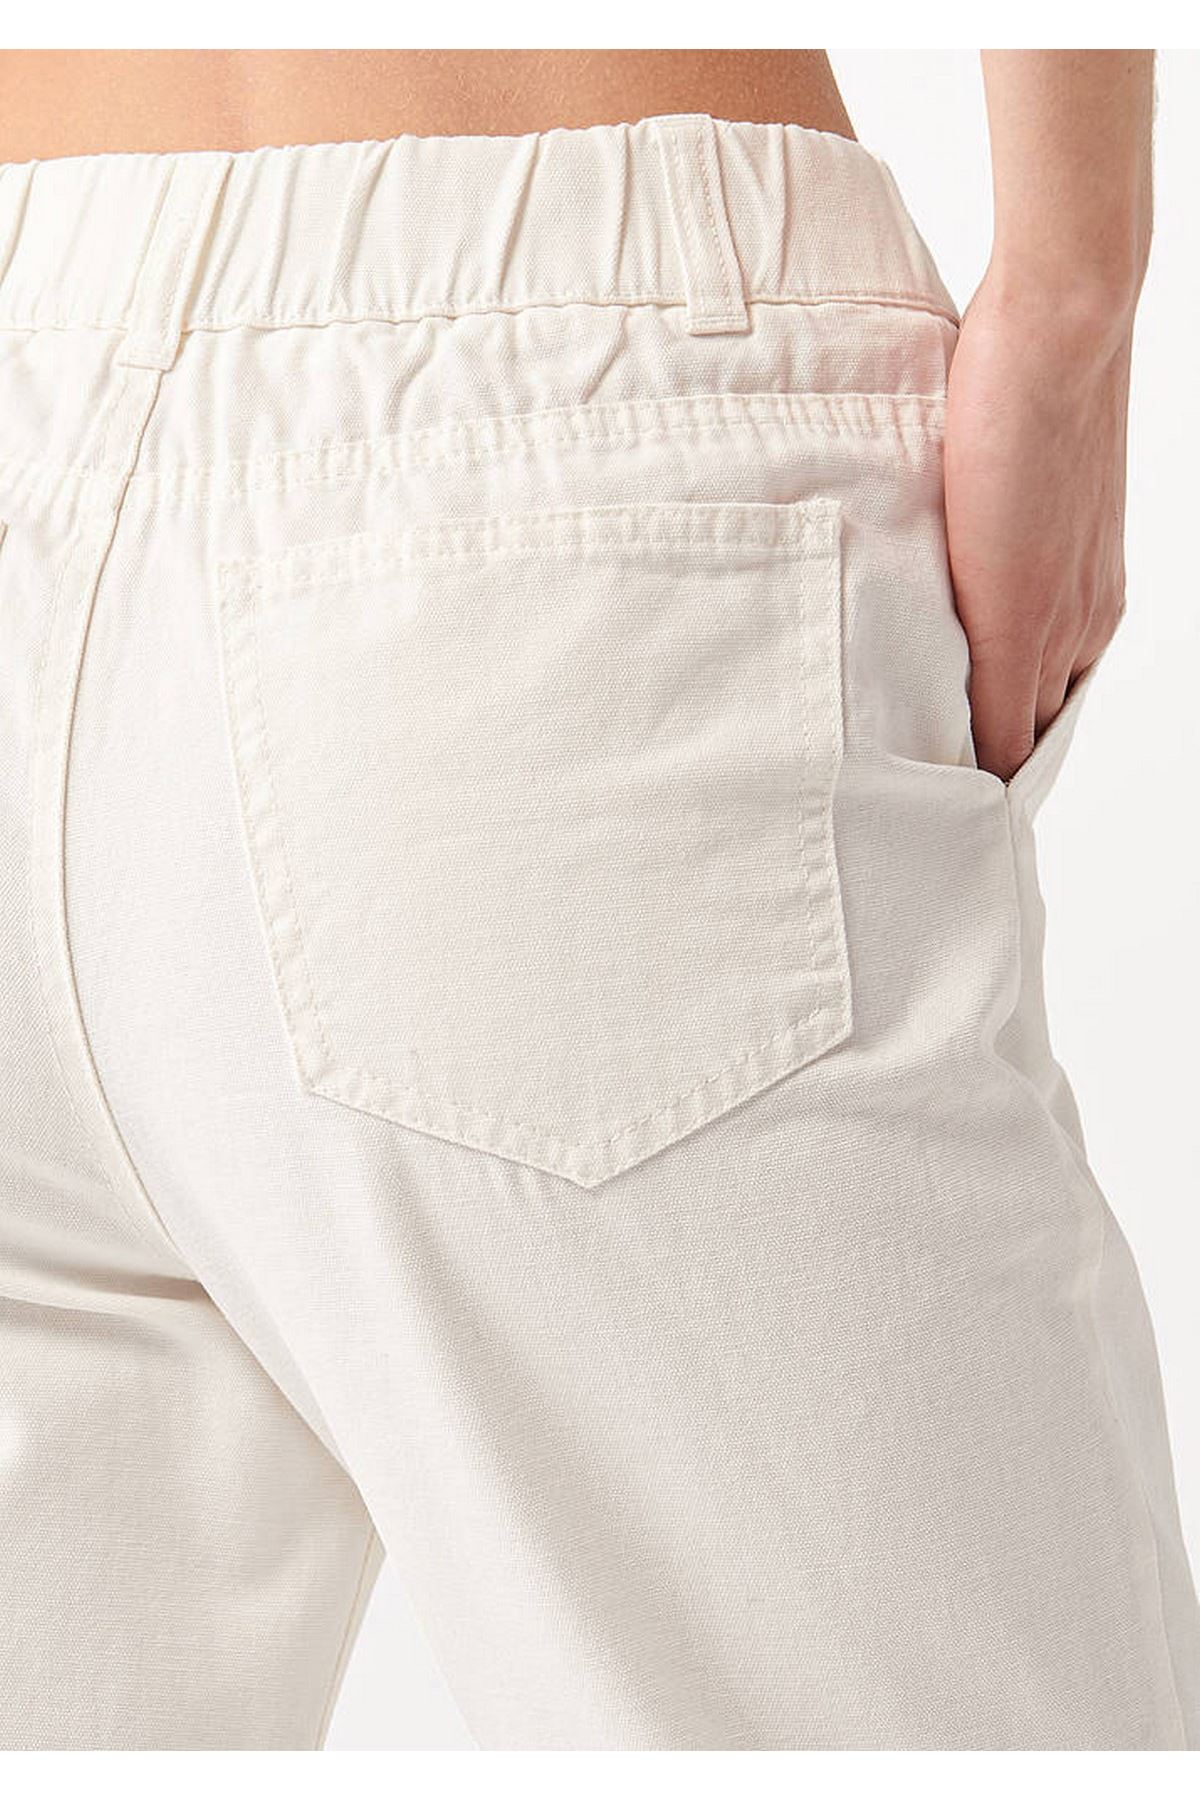 Dokuma Mavi Kadın Beyaz Kanvas Pantolon - M1010065-70057